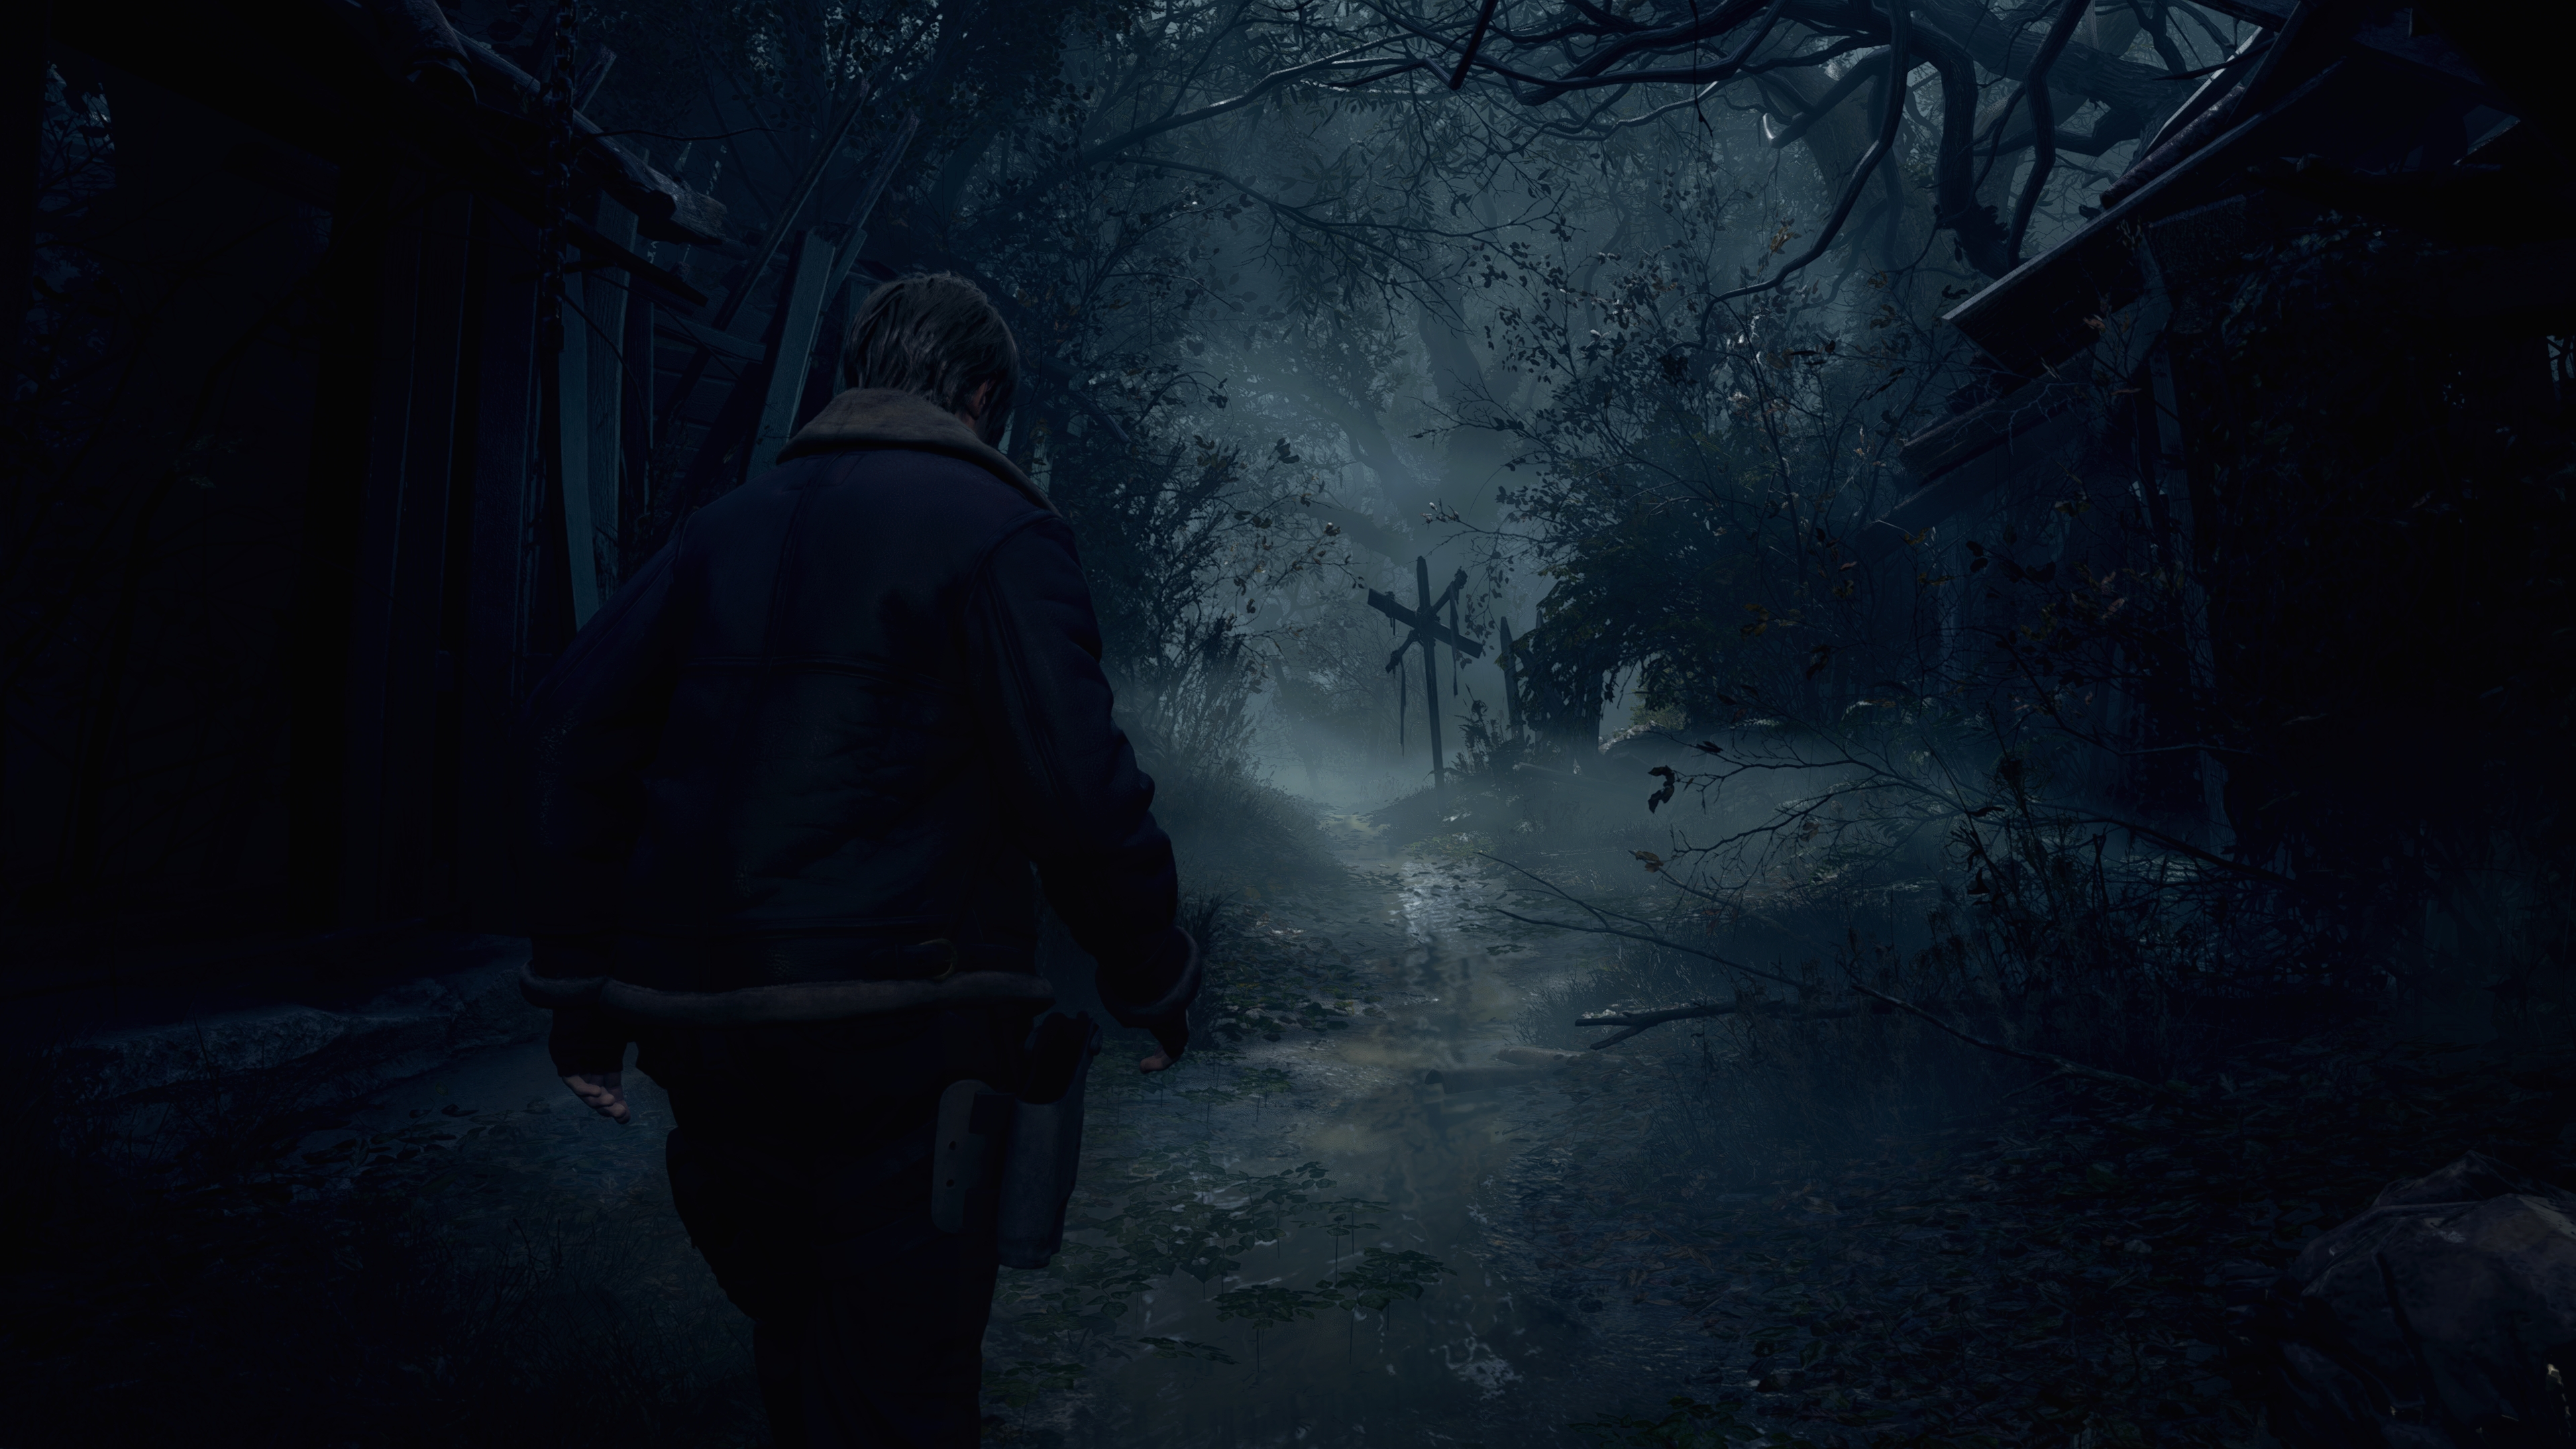 Resident Evil 4 remake DLC 'Separate Ways' launch trailer, gameplay, and  screenshots - Gematsu